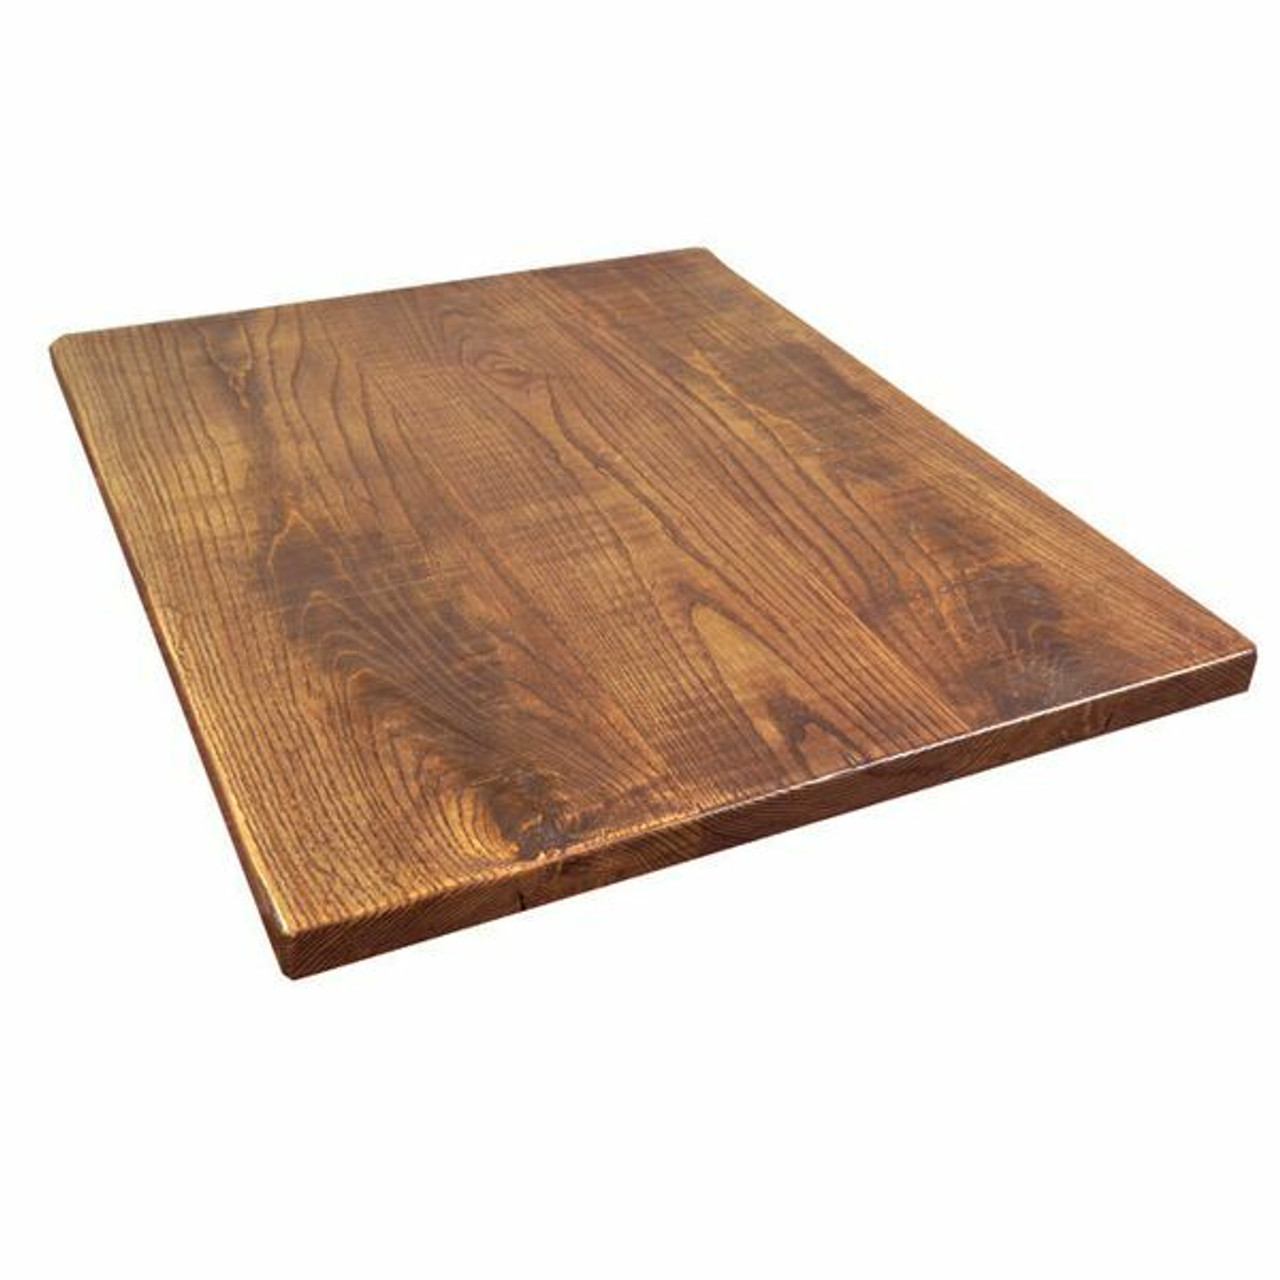 TopShield™ Table Top, 1-1/4" thickness, rustic wood, light walnut finish